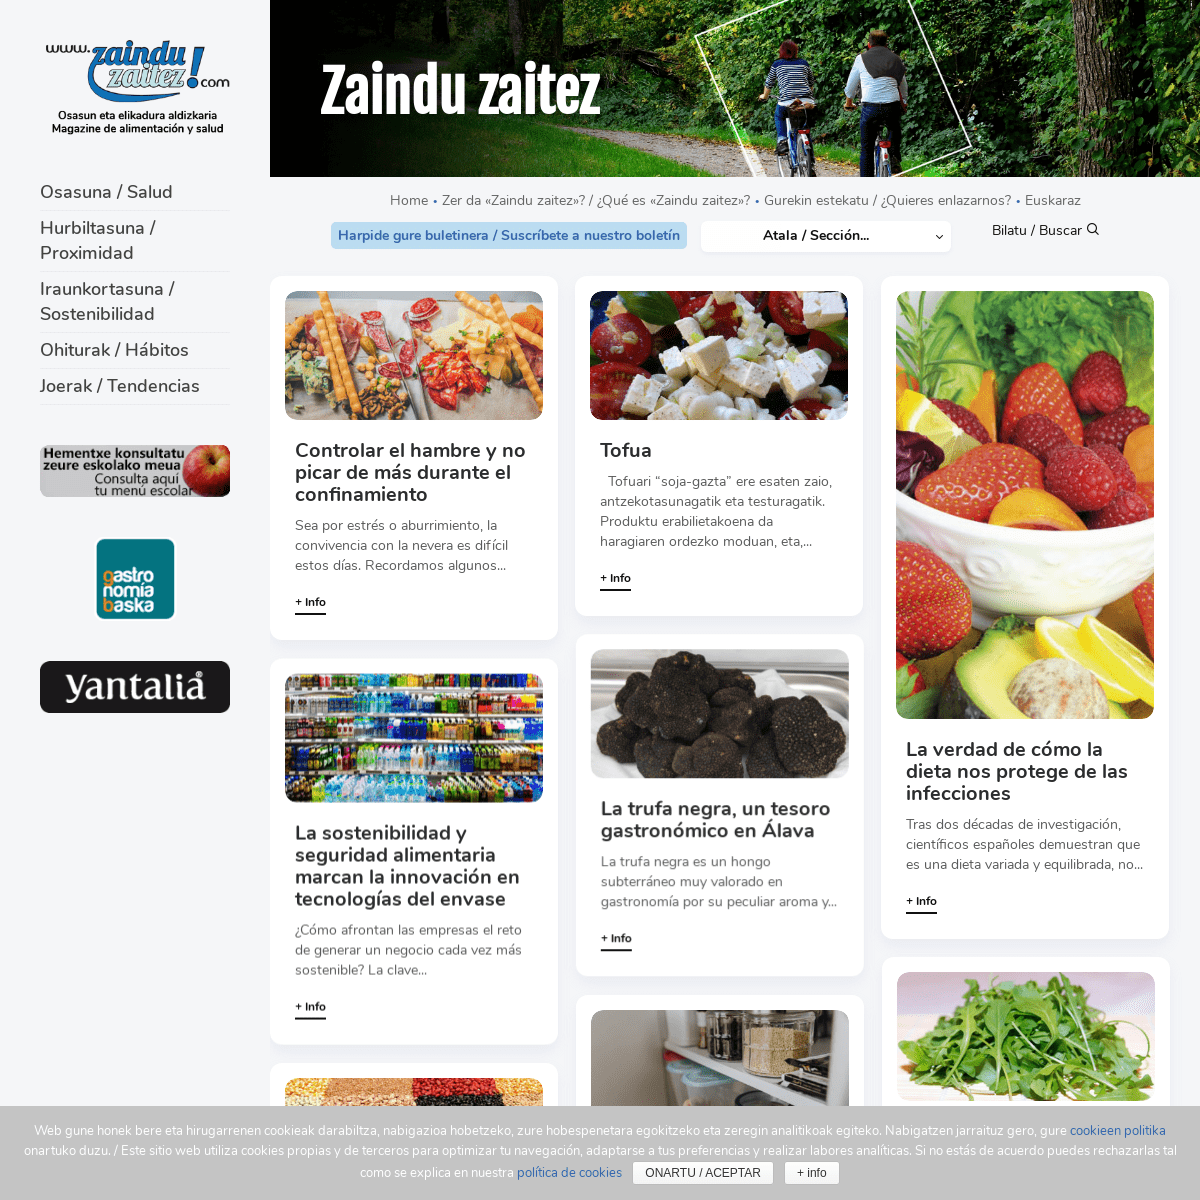 A complete backup of zainduzaitez.com